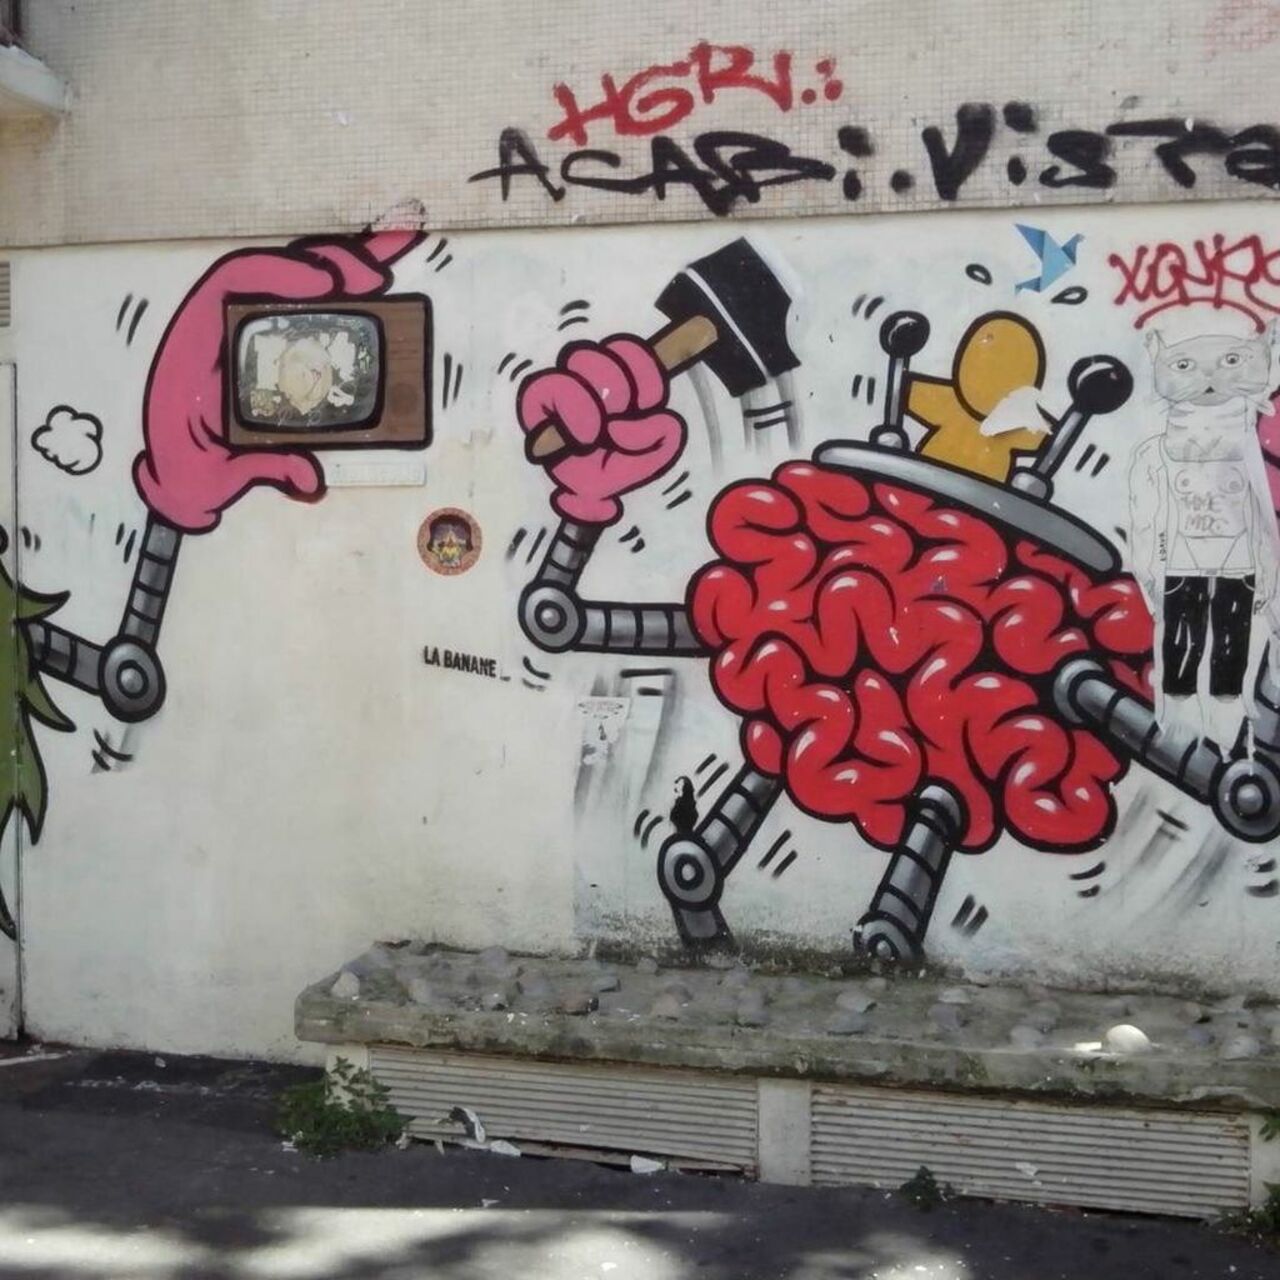 #streetart #streetarteverywhere #streetshot #graffitiart #graffiti #arturbain #urbanart  #mur #mural #wall #wallart… https://t.co/4aBkcHgg73